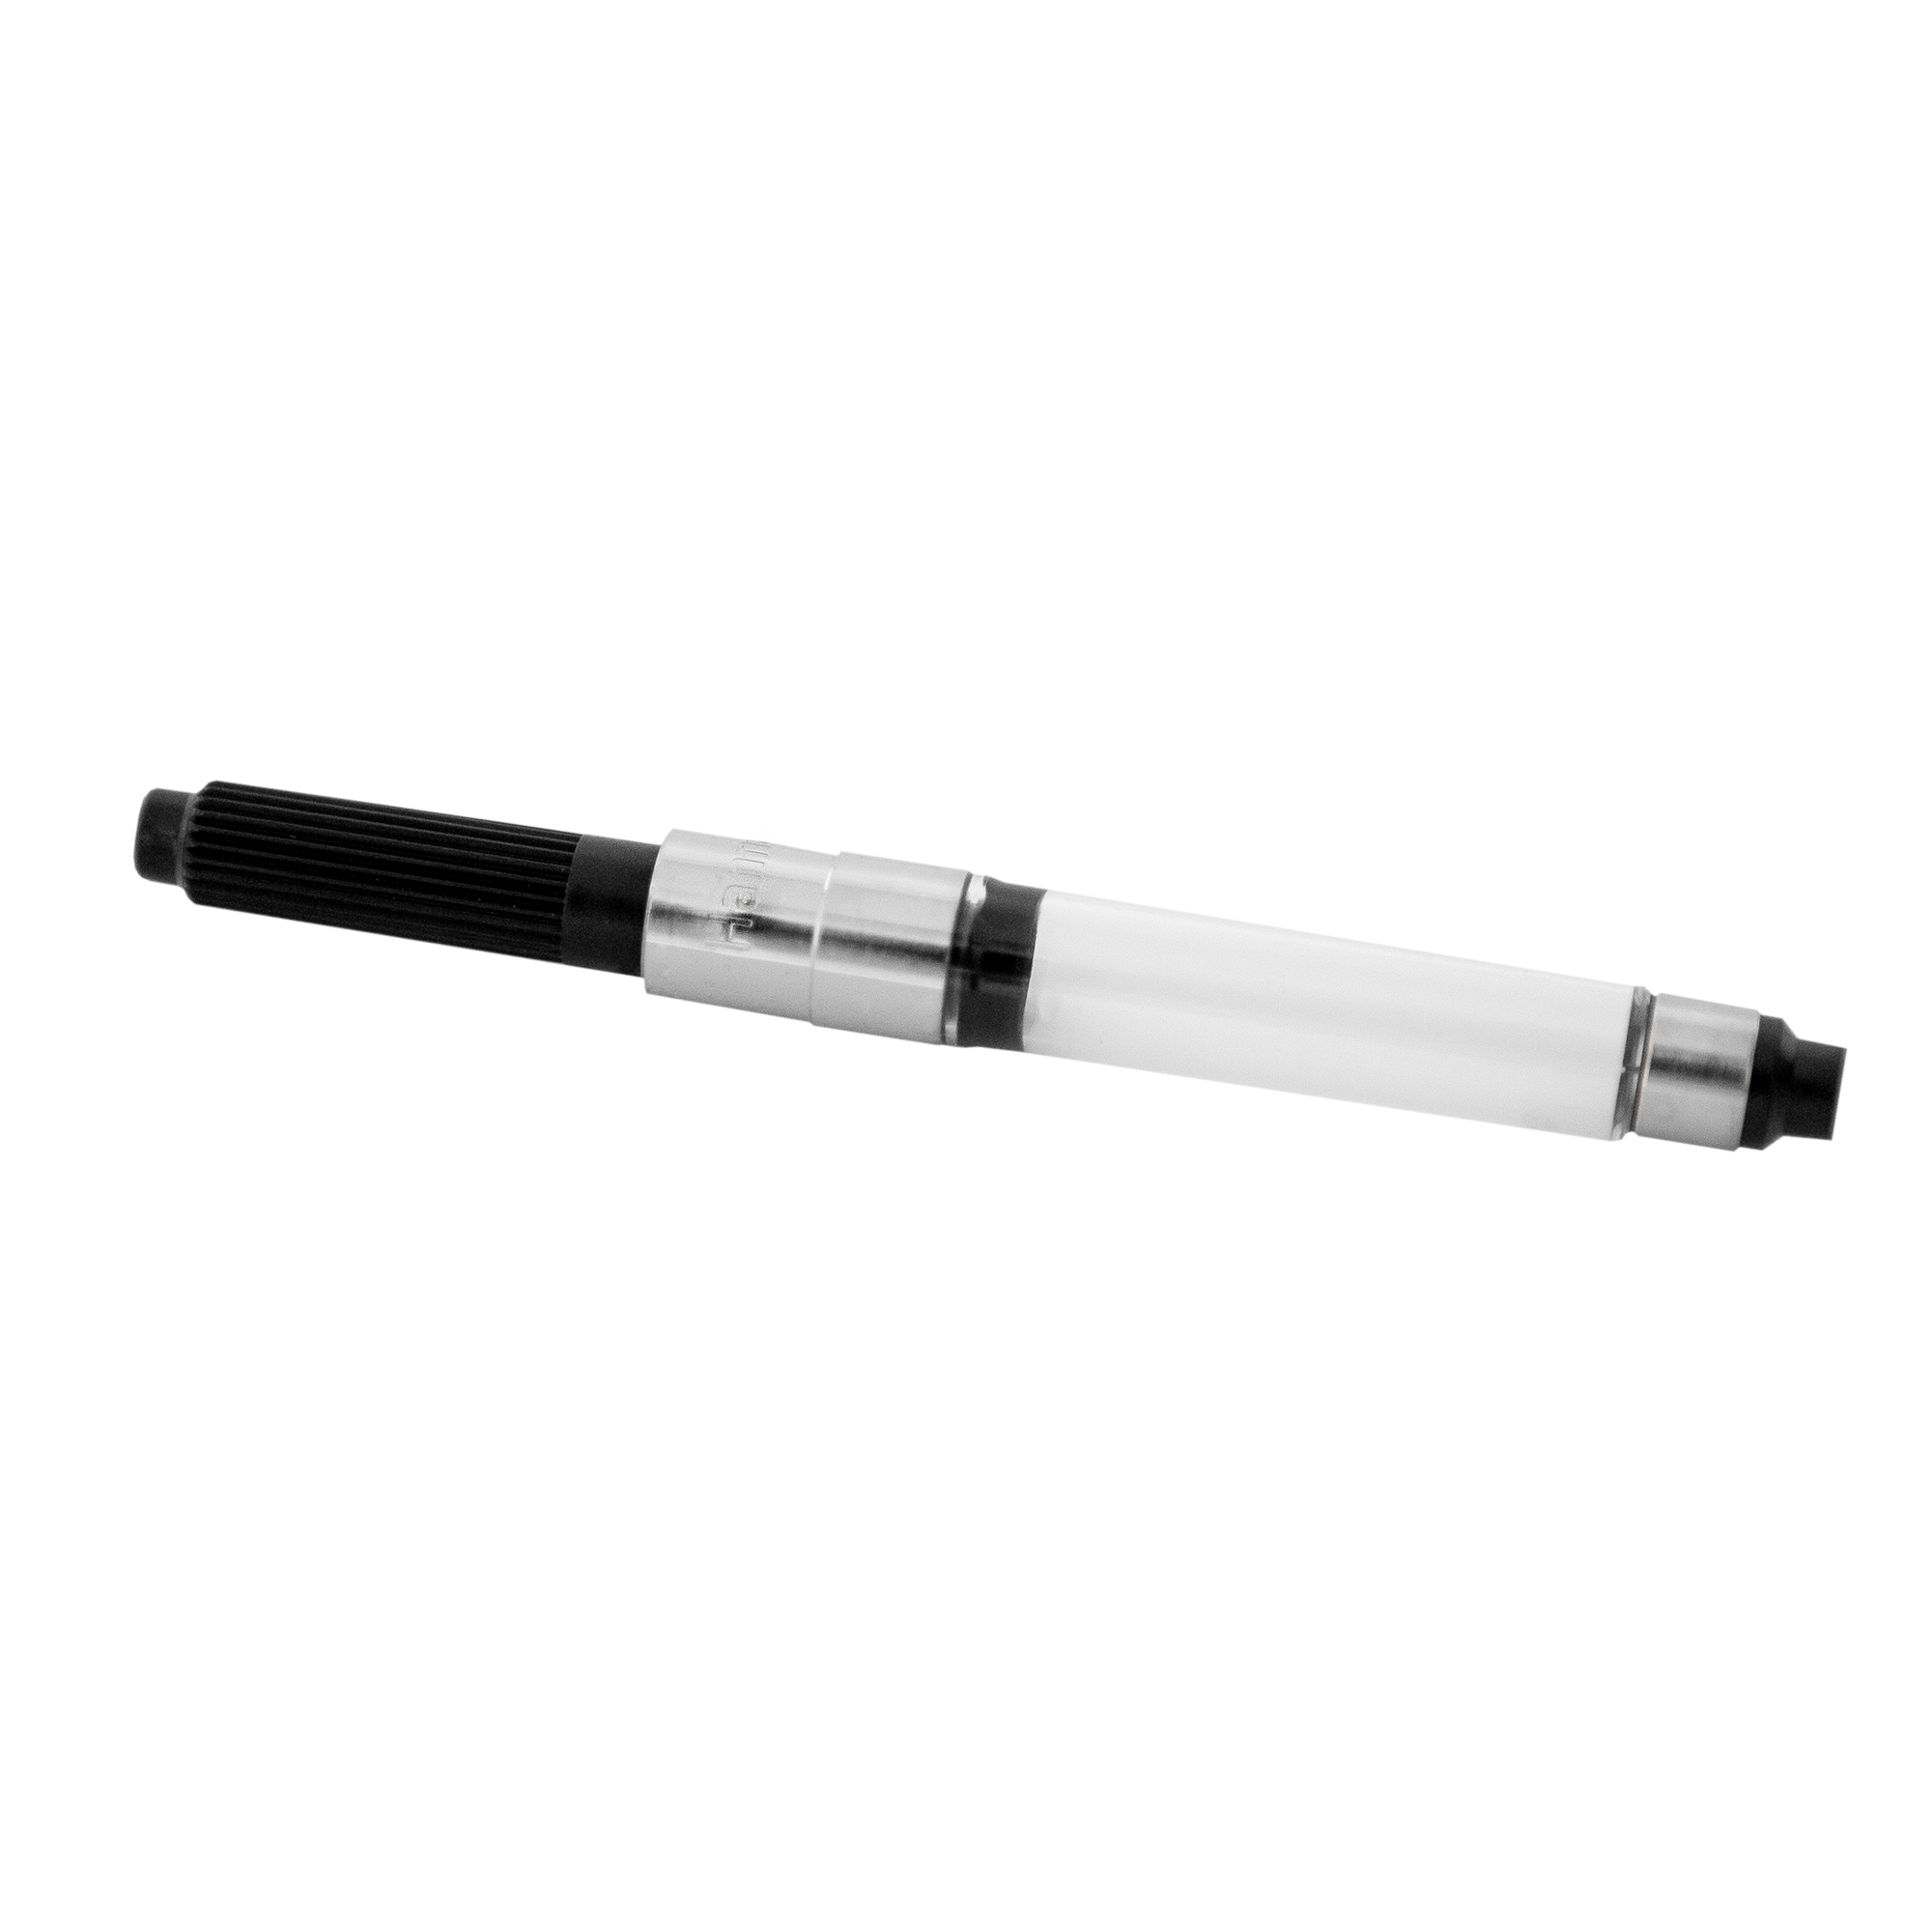 Ink Converter for Fountain pen